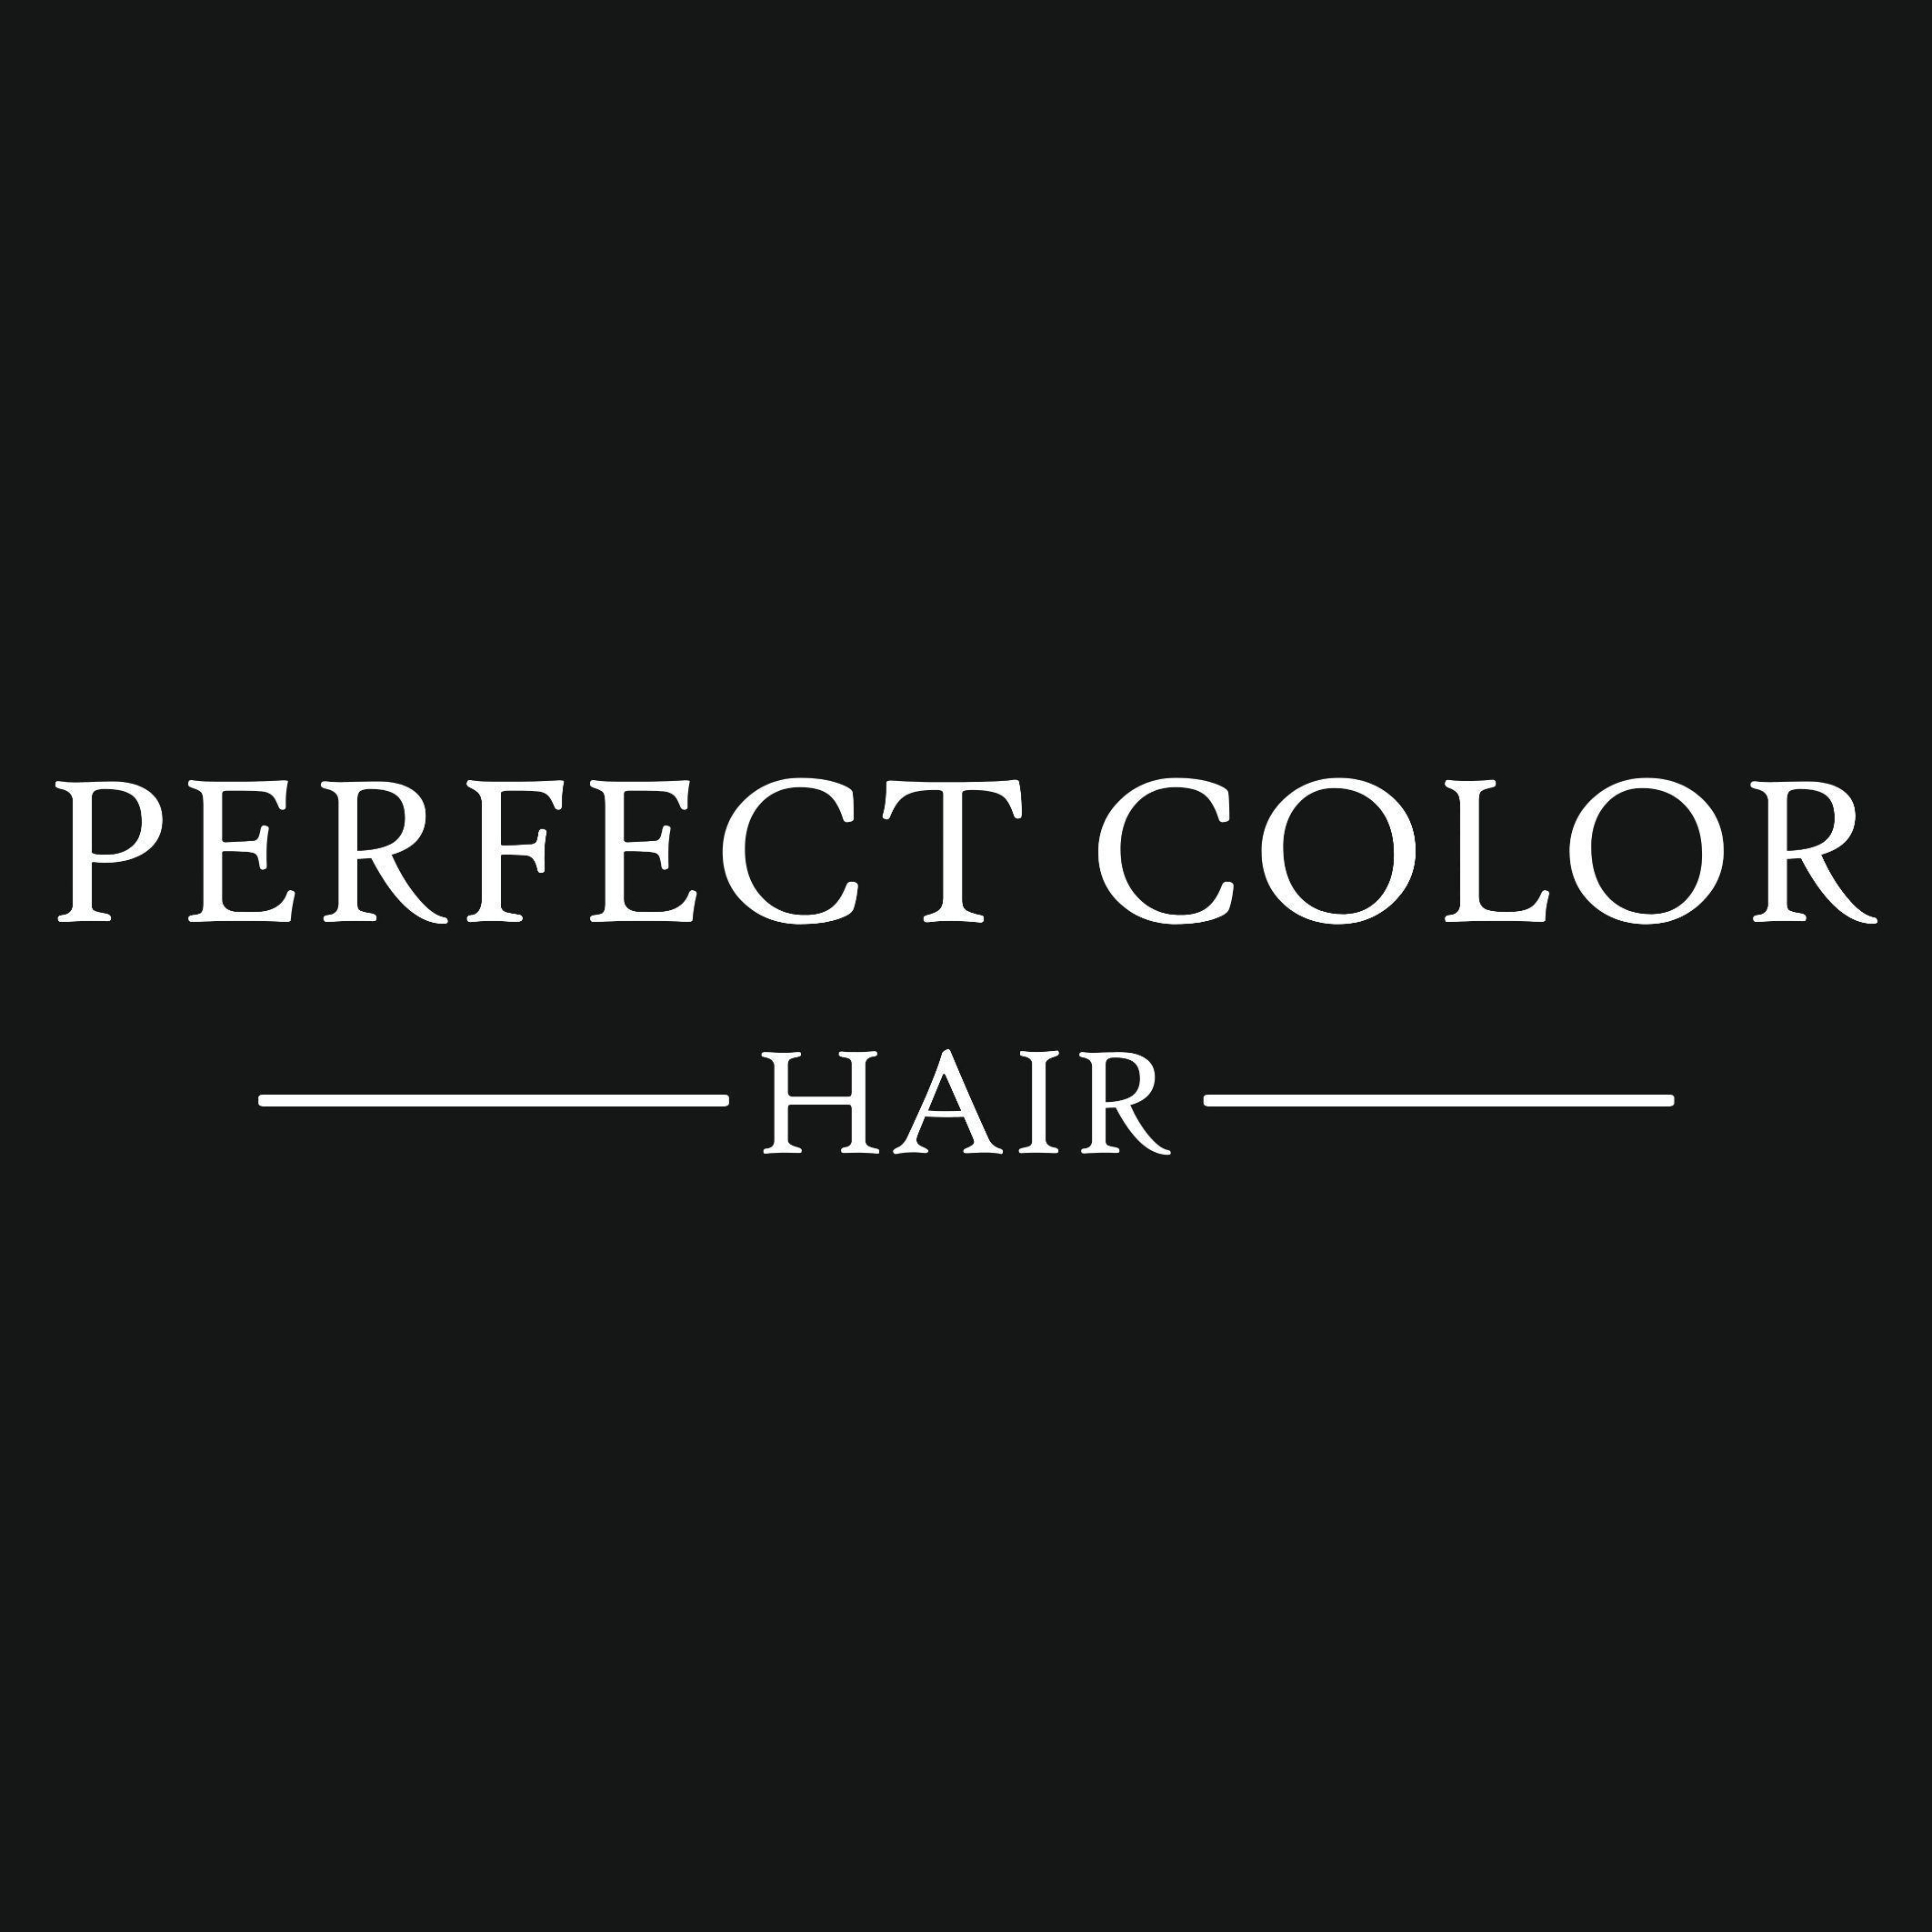 Perfect color hair, Powstańców 41, 3, 05-091, Ząbki